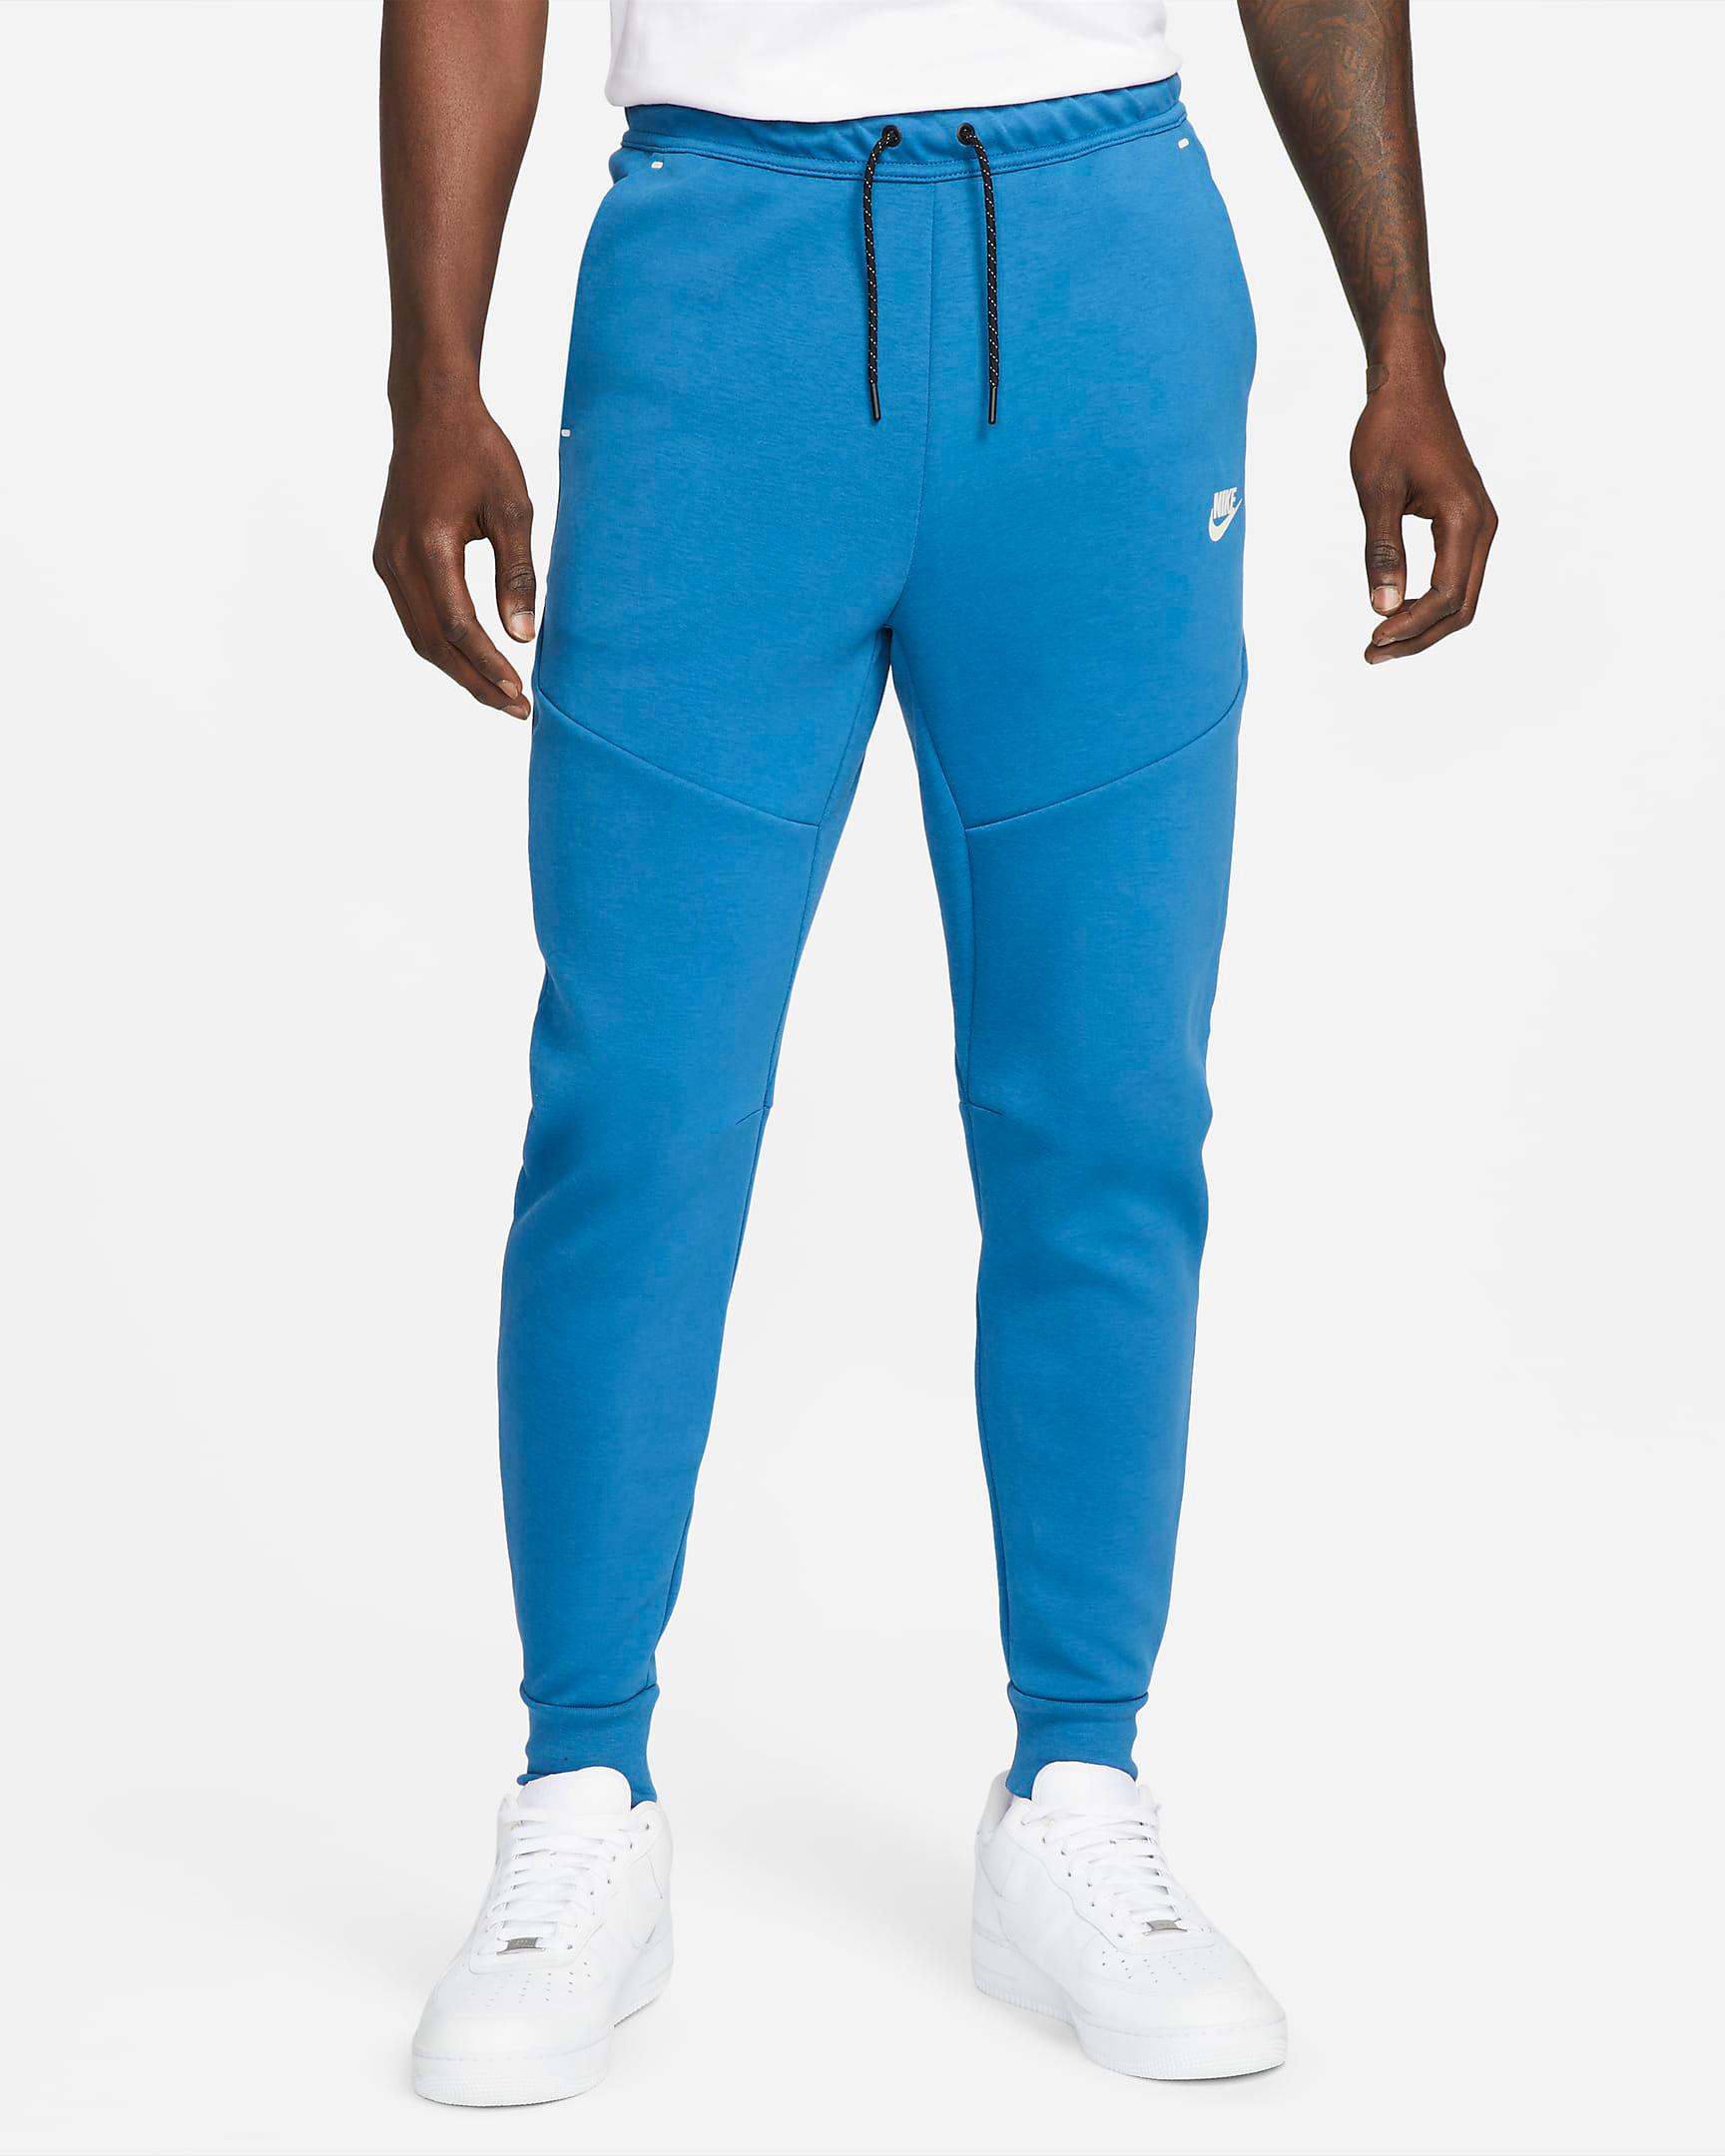 nike-tech-fleece-joggers-pants-dark-marina-blue-1